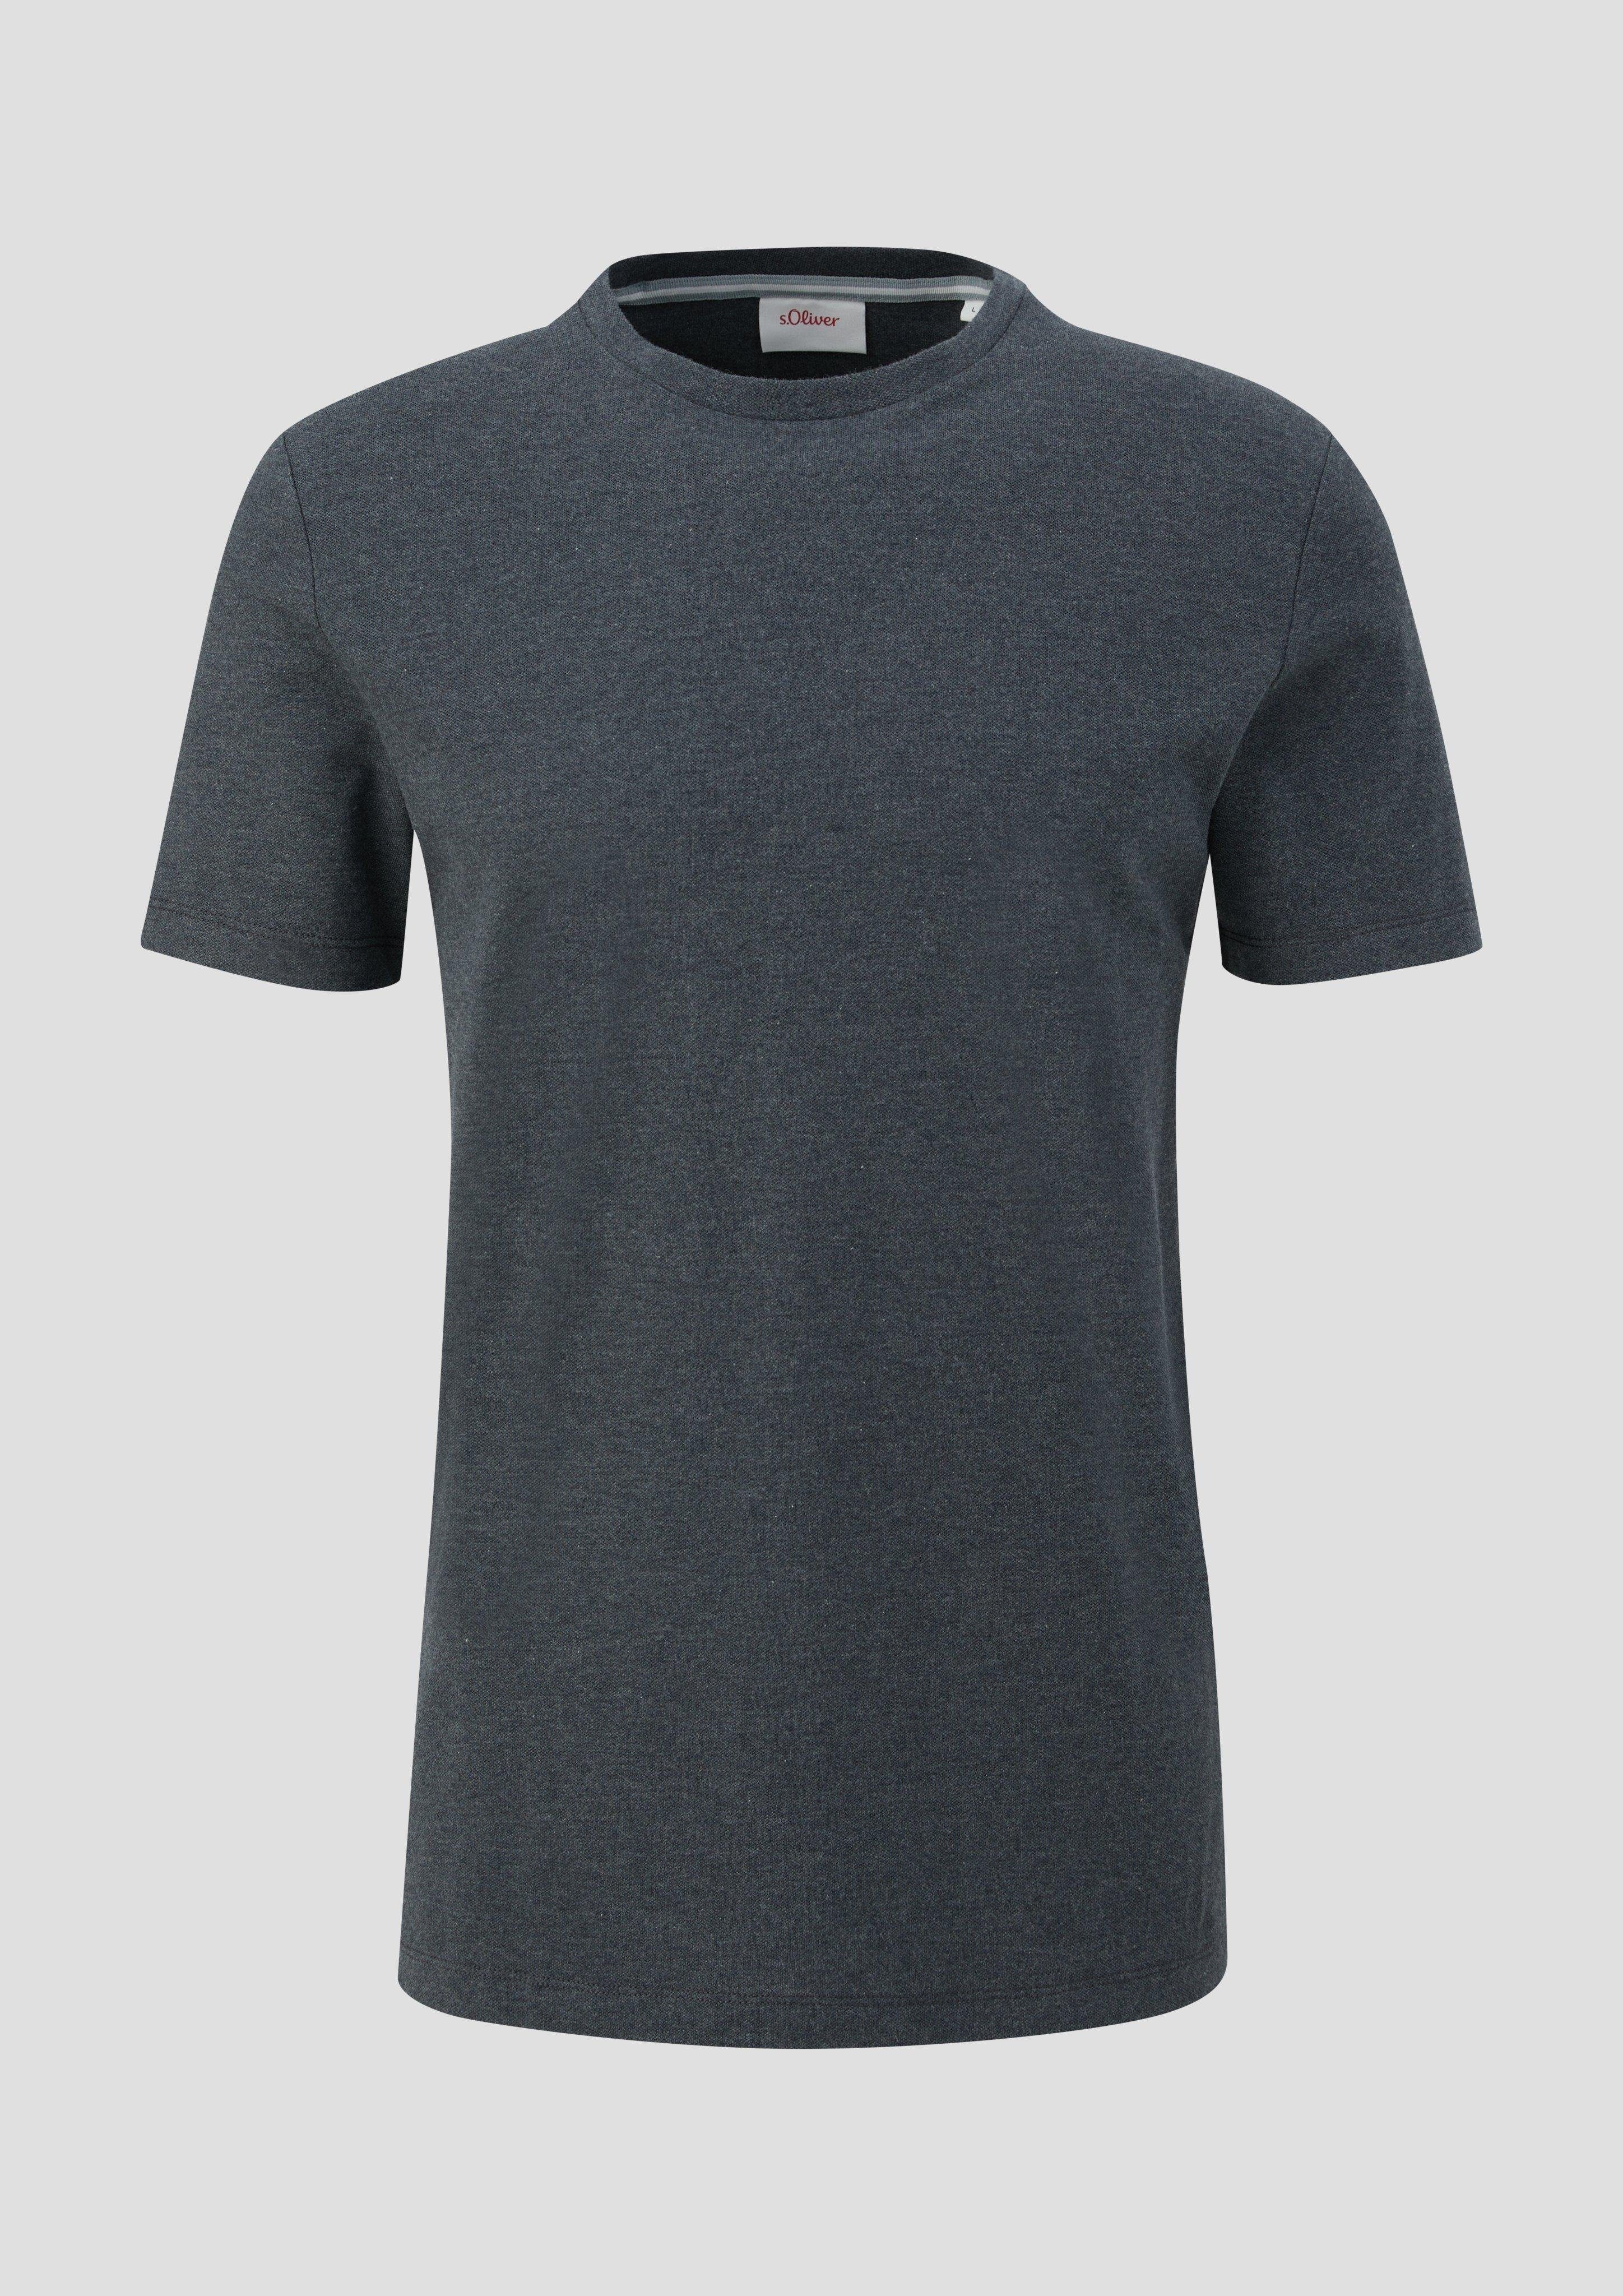 s.Oliver Kurzarmshirt T-Shirt mit Piqué-Struktur dunkelgrau Blende